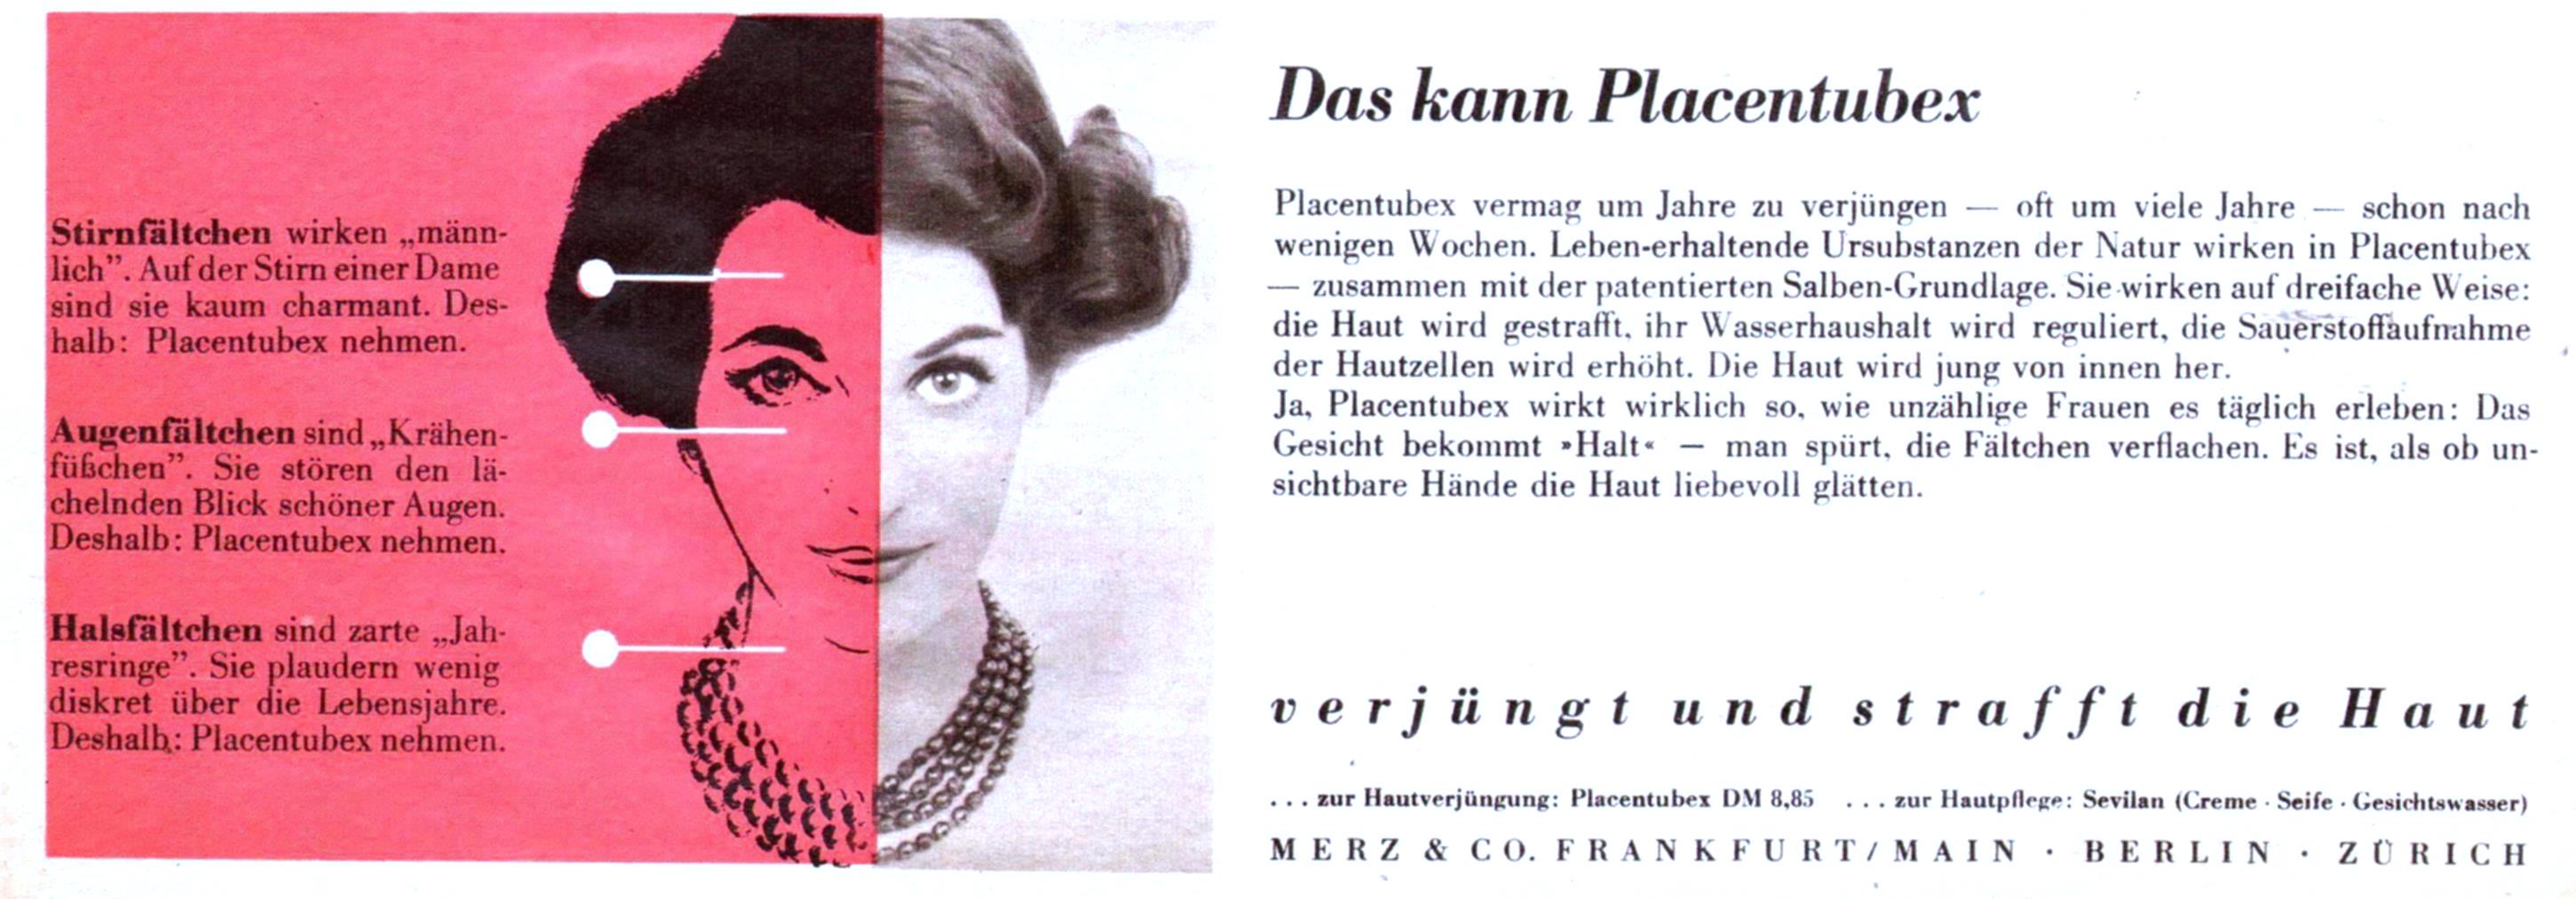 Plazentubex 1960 70.jpg